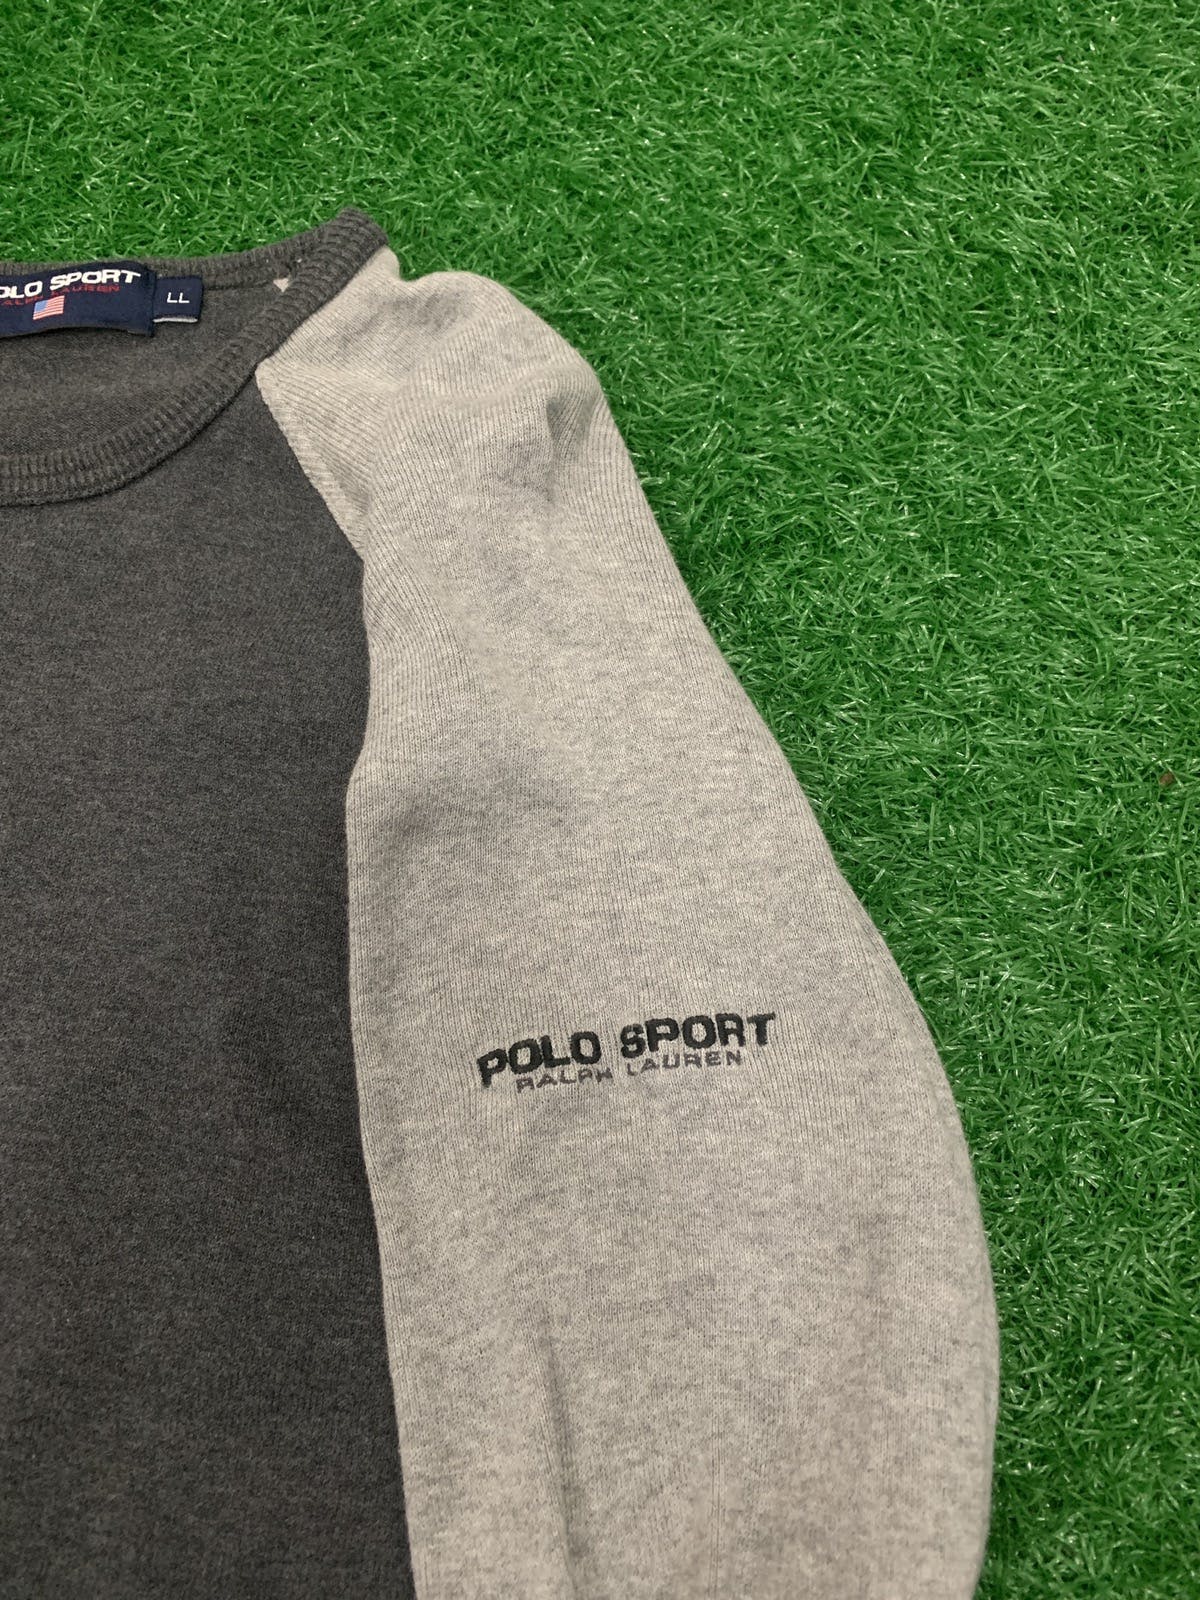 Polo Ralph Lauren - Vintage polo sport ralph laurent shirt - 6